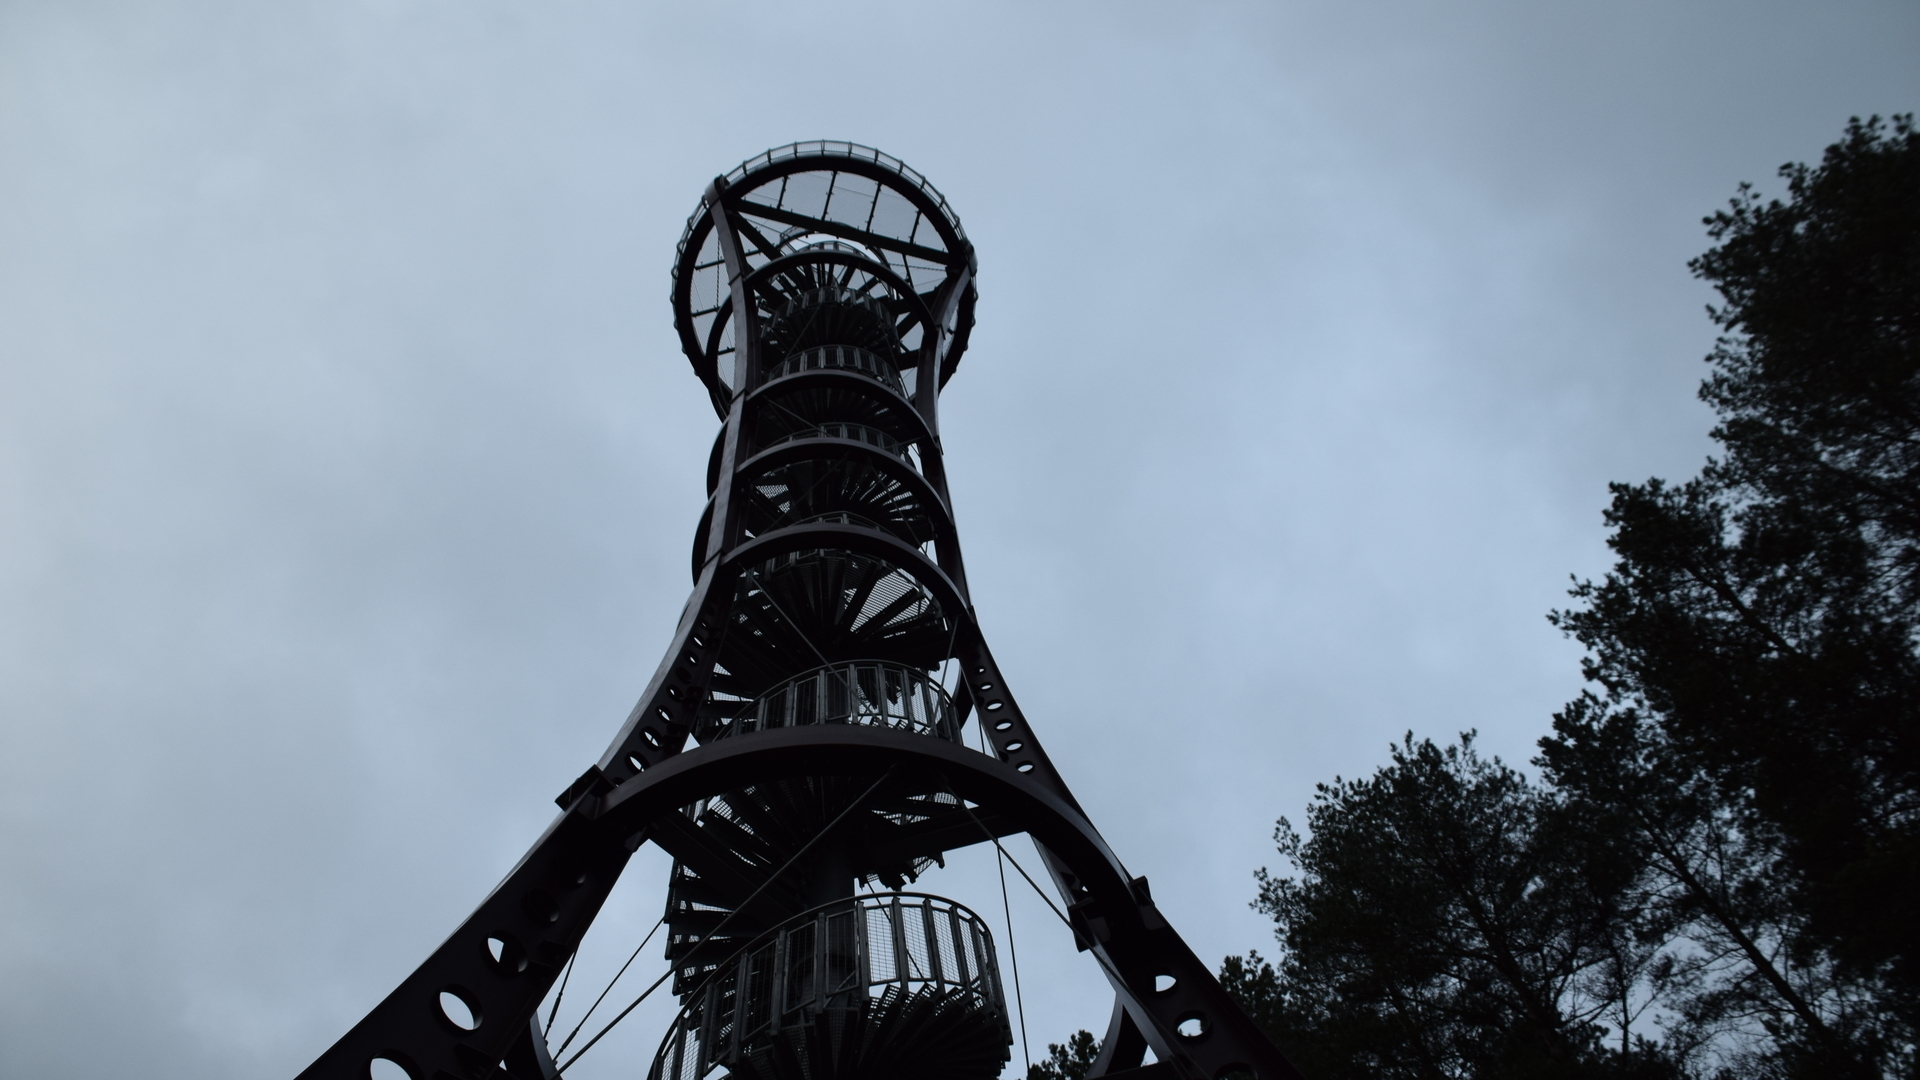 Labanoras Regional Park observation tower